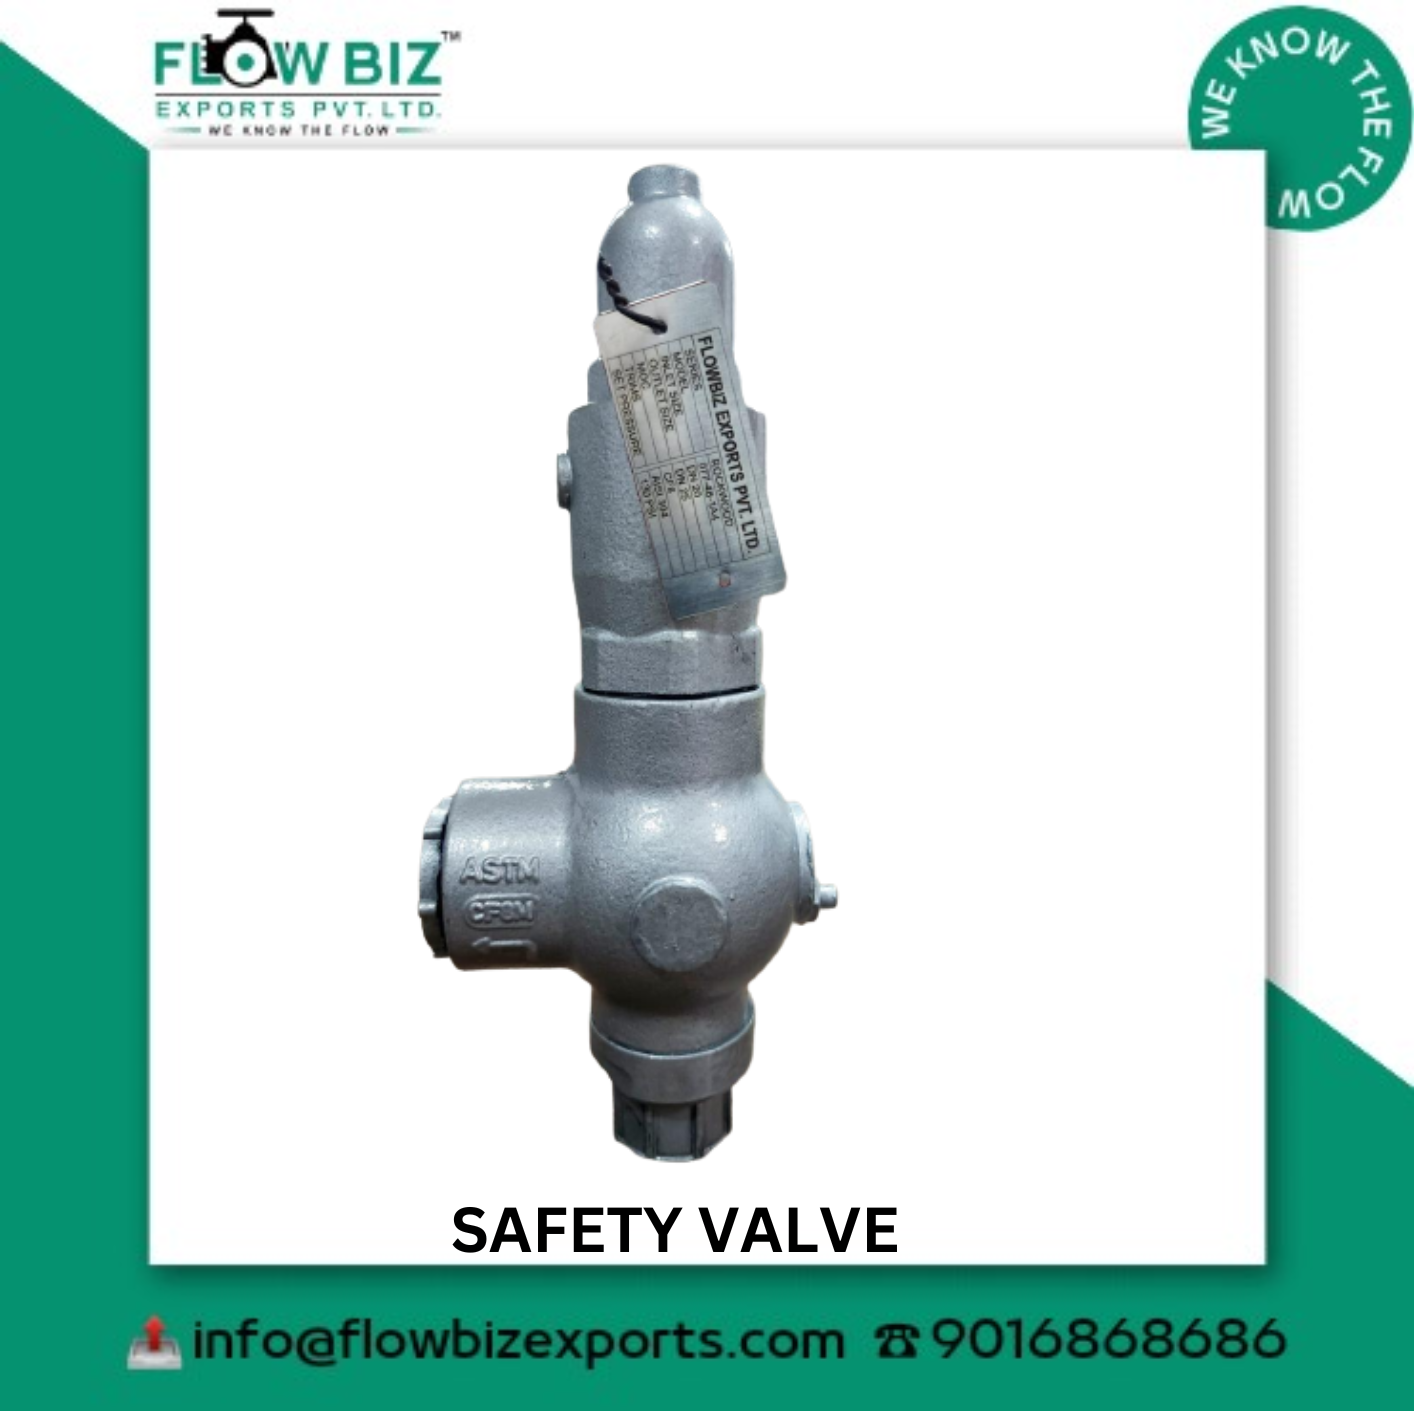 a durable and reliable safety valve manufacturer mumbai - Flowbiz